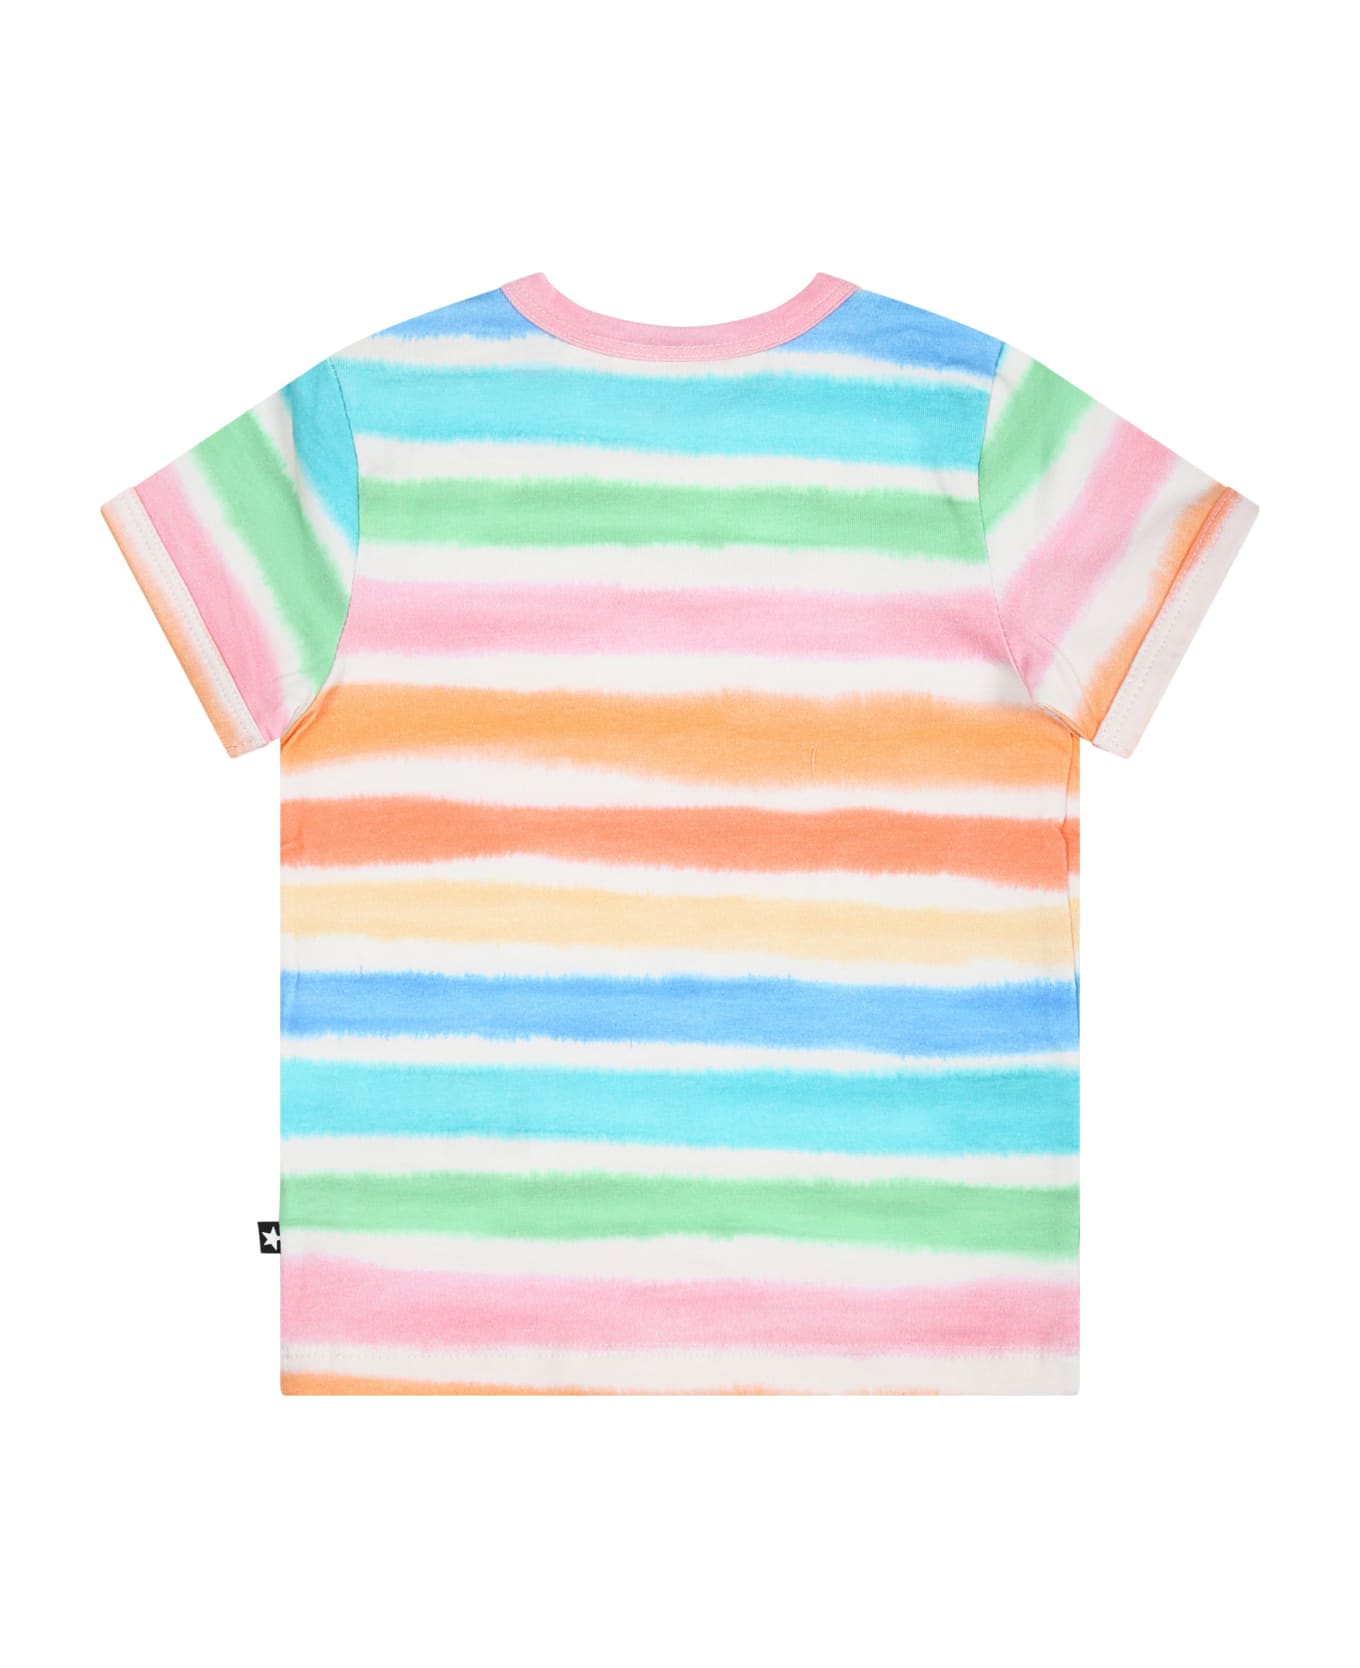 Molo Multicolor T-shirt For Baby Kids - Multicolor Tシャツ＆ポロシャツ